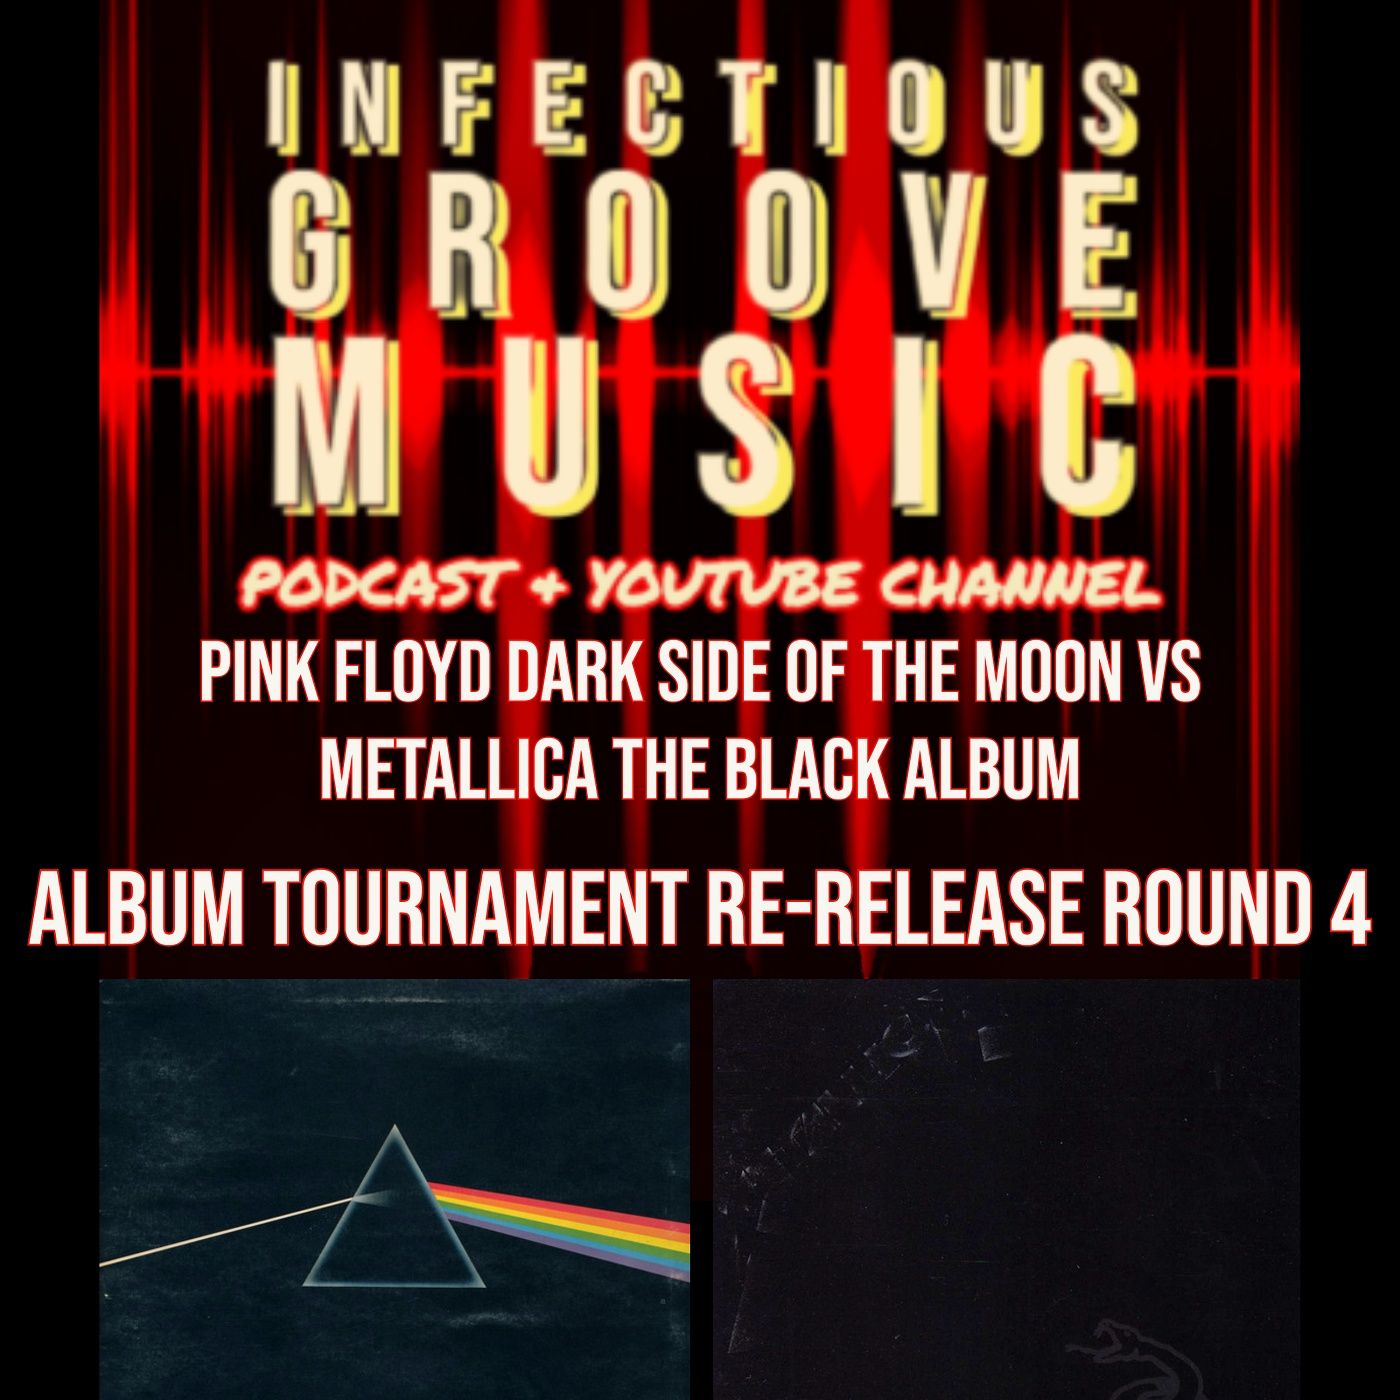 Album Tournament Re-Release Round 4 - Pink Floyd Vs Metallica